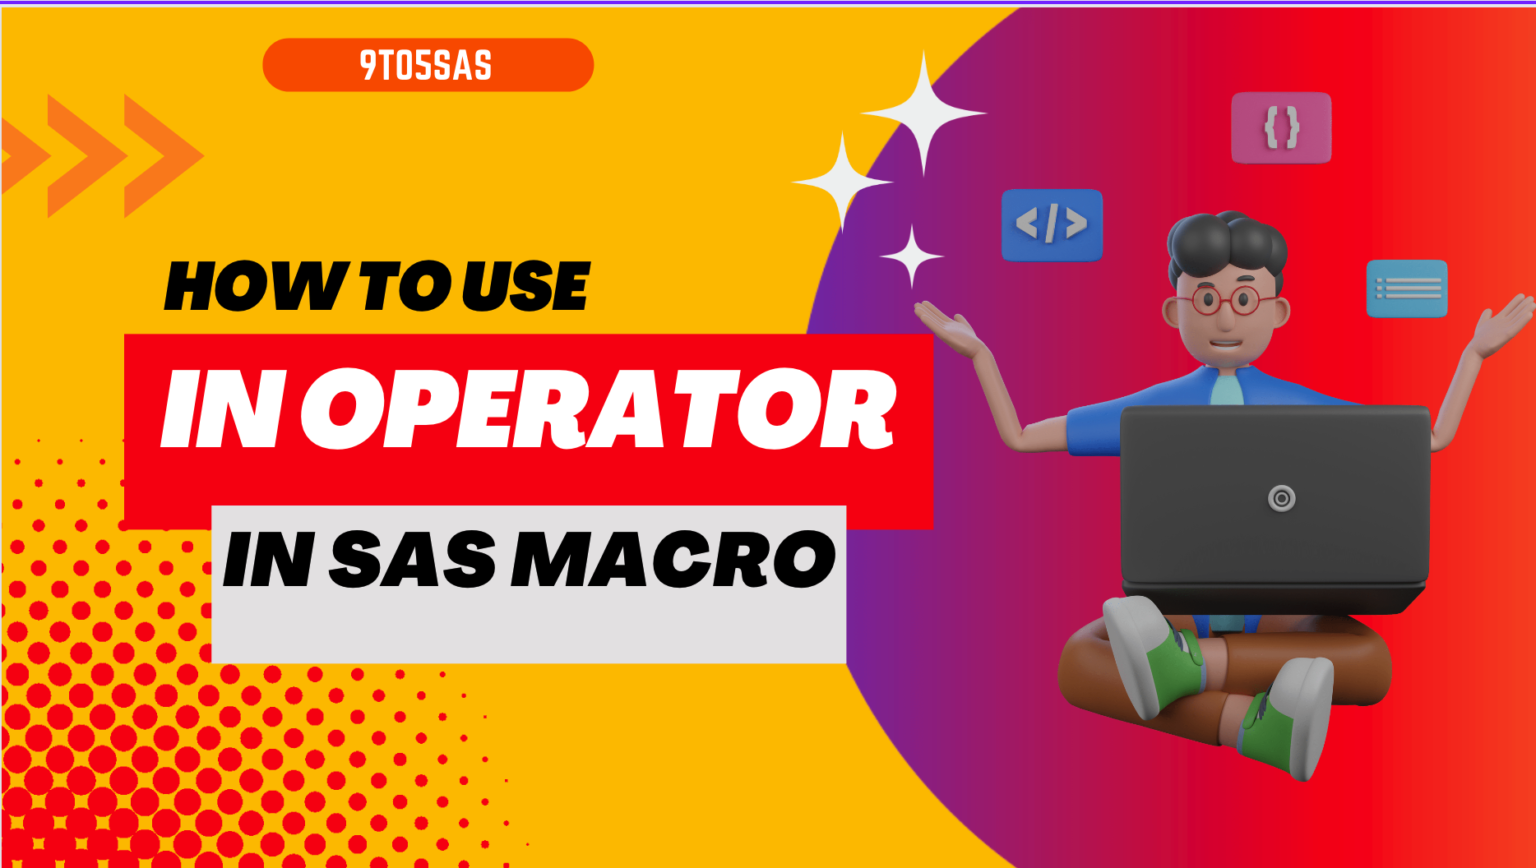 IN Operator in SAS Macro